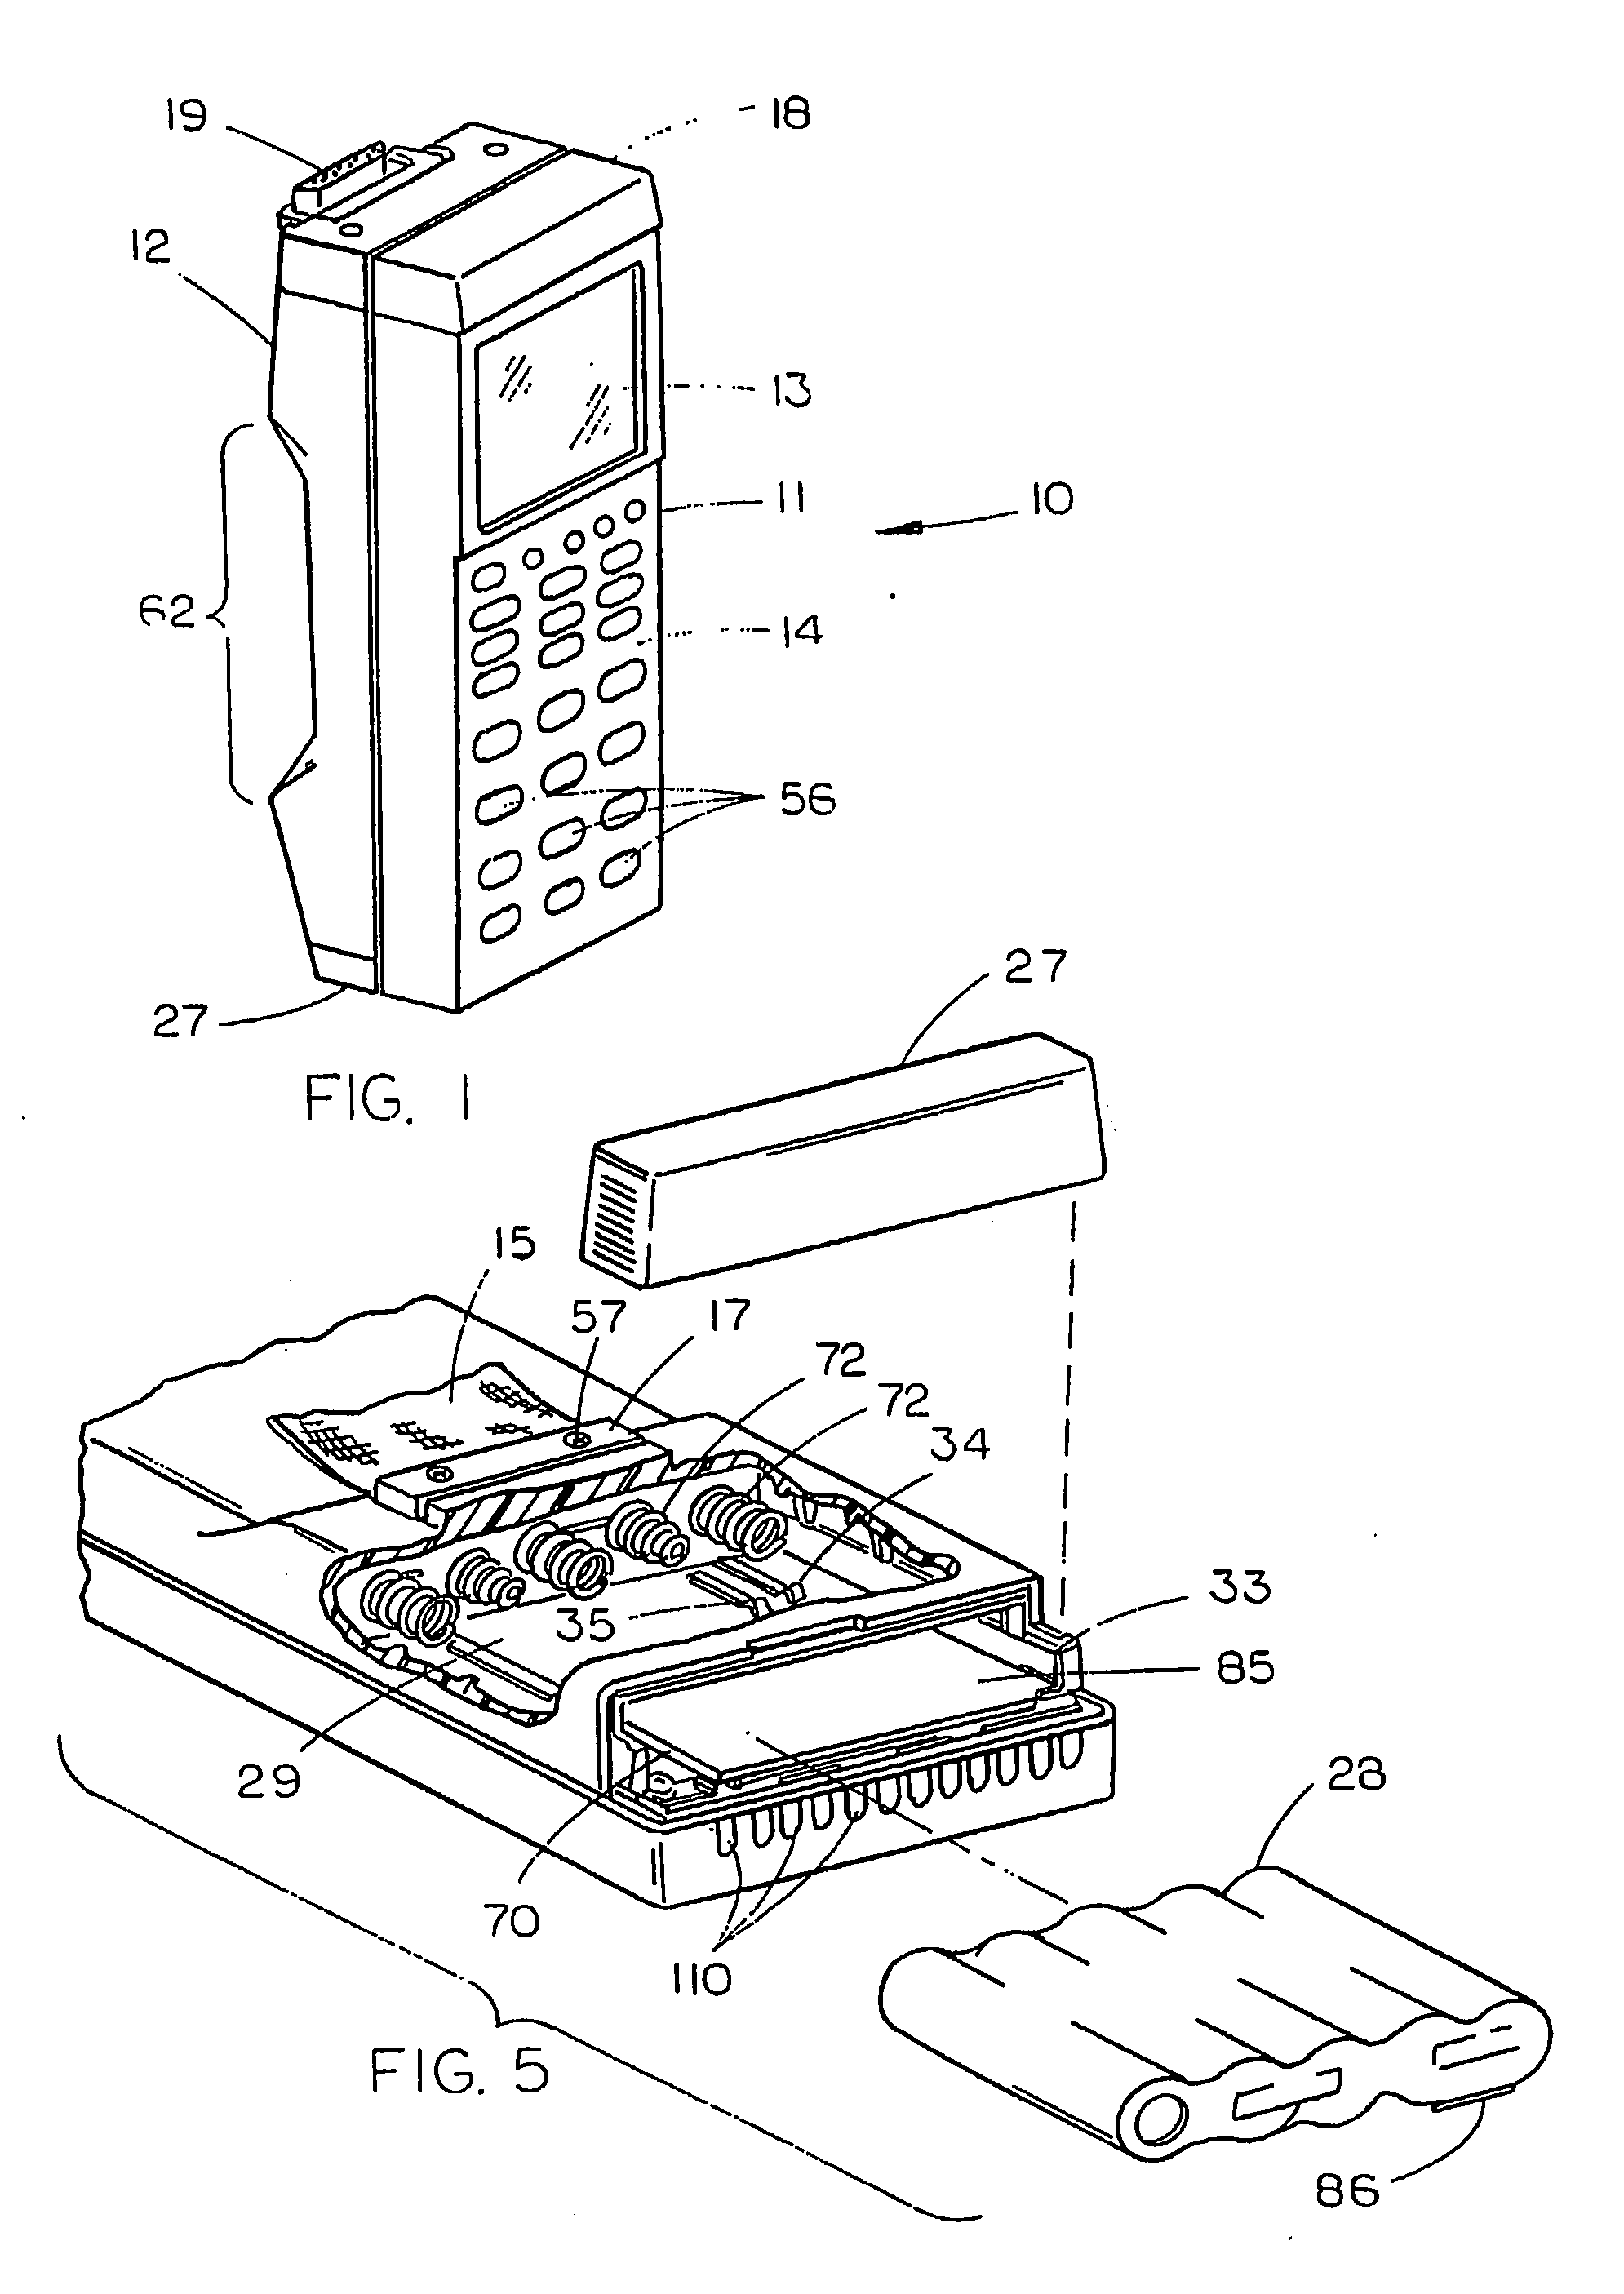 Portable computerized data communication device